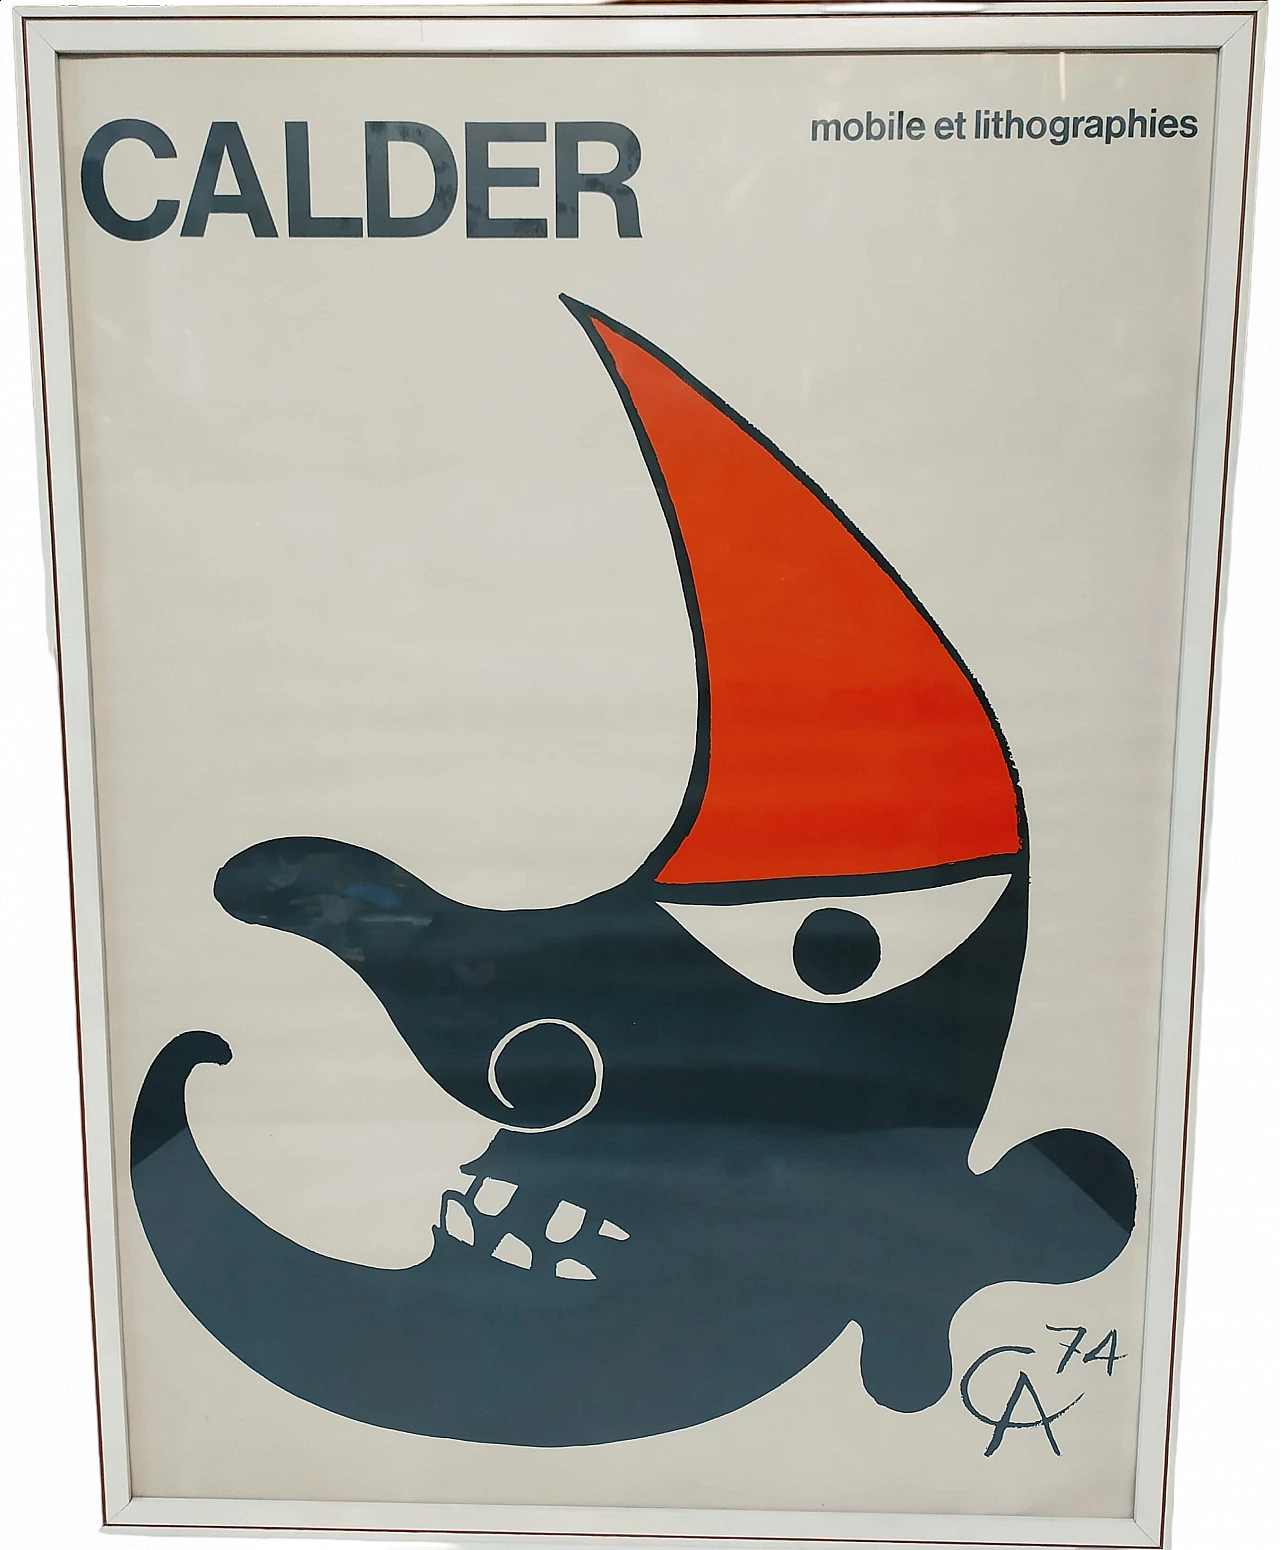 Alexander Calder, Mobile et Lithographies, litograph, 1974 5